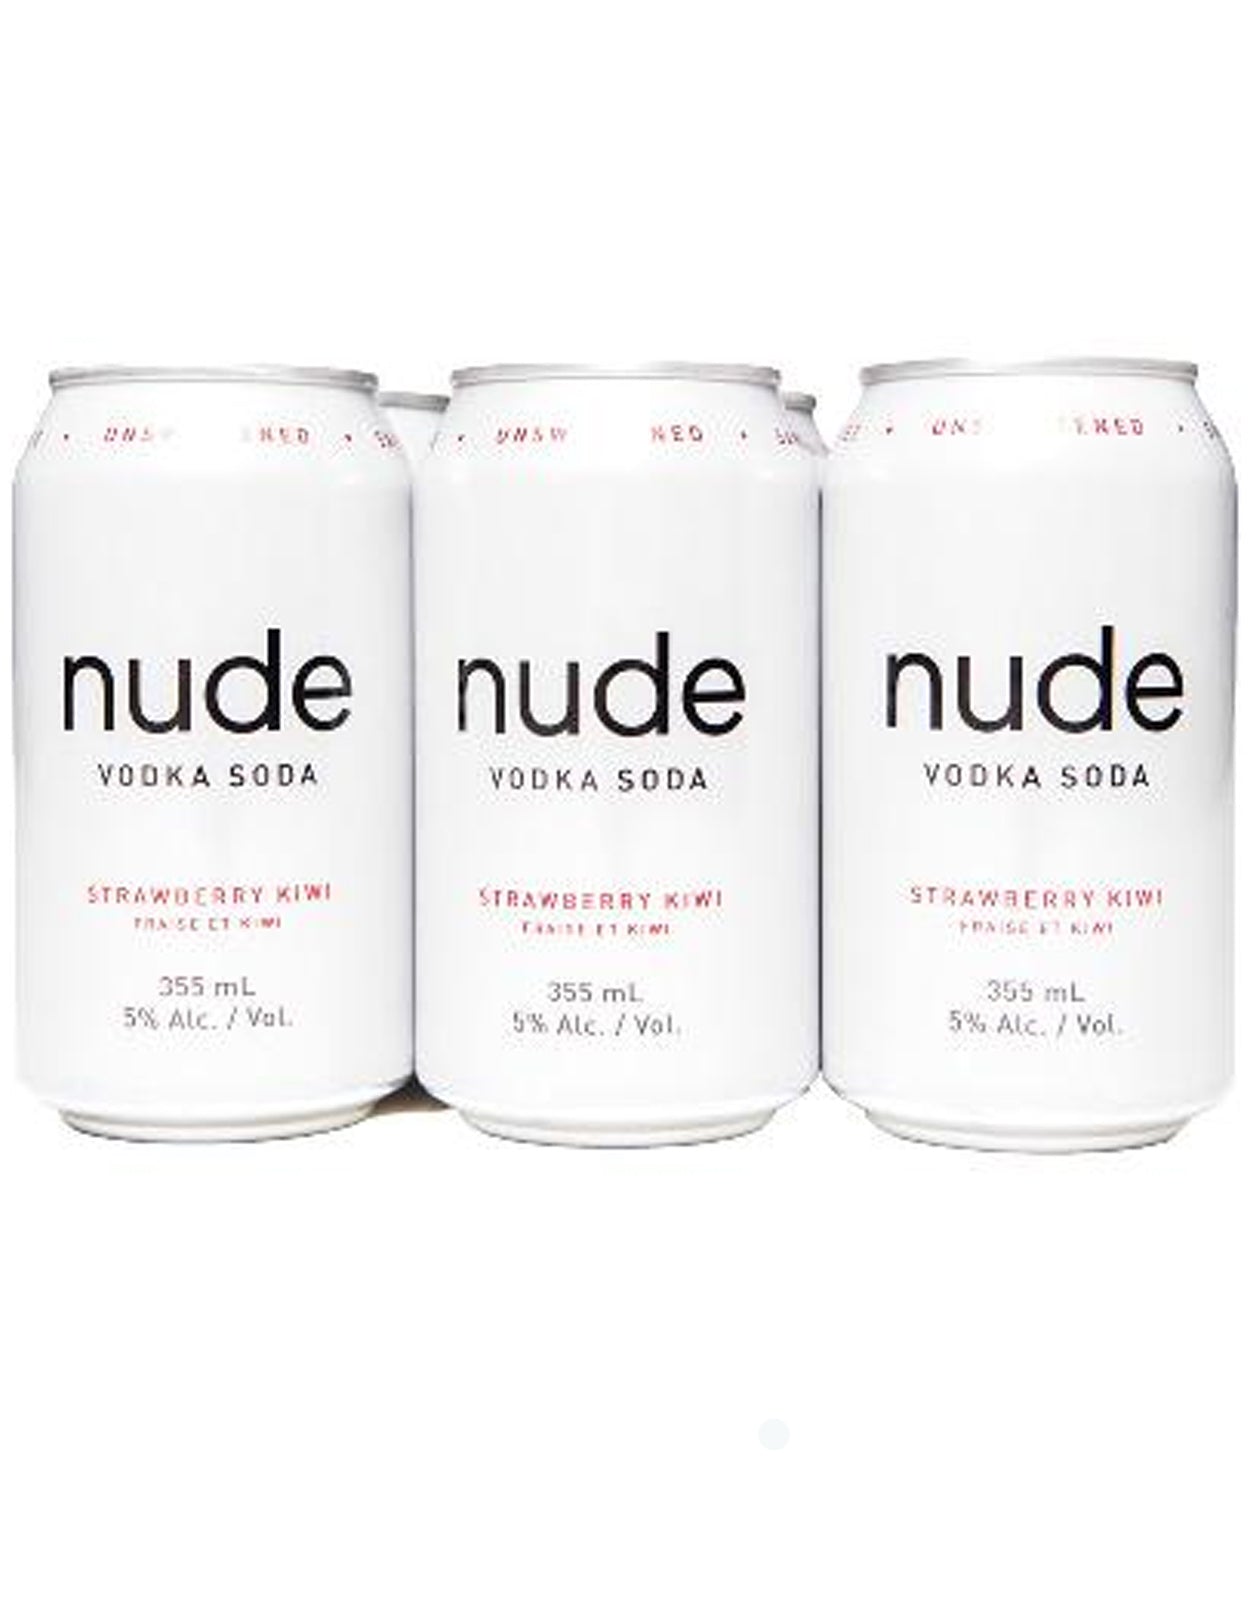 Nude Vodka Soda Strawberry Kiwi 355 ml - 6 Cans